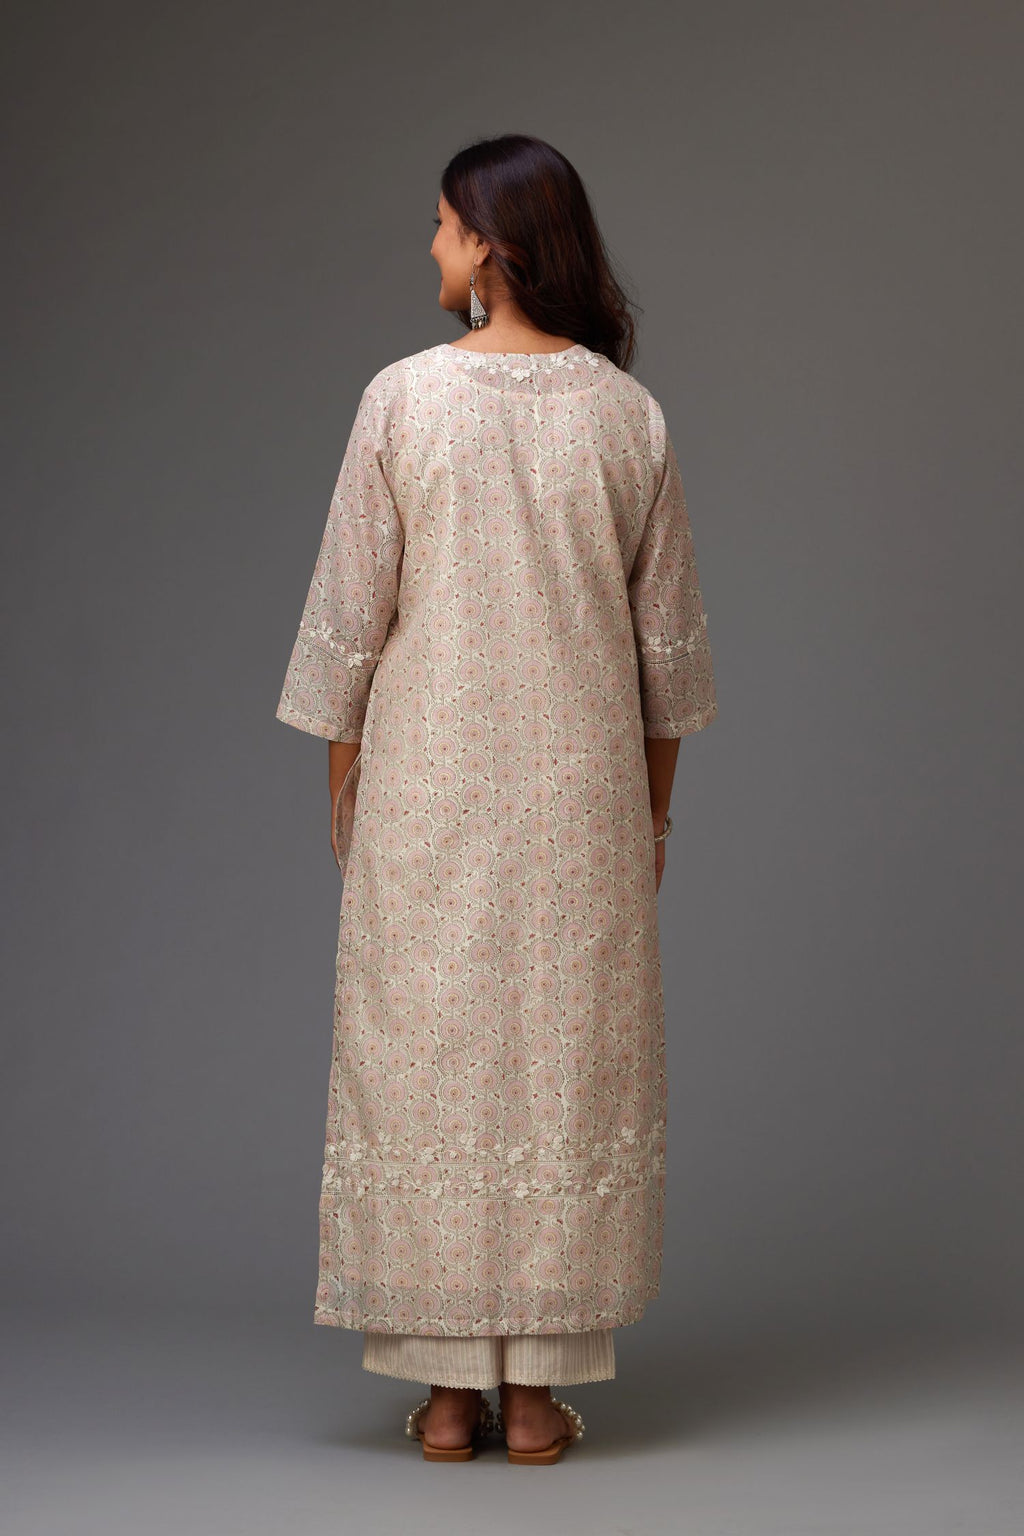 Silk chanderi hand-block printed straight kurta set with sequins work and chiffon flower embroidery.